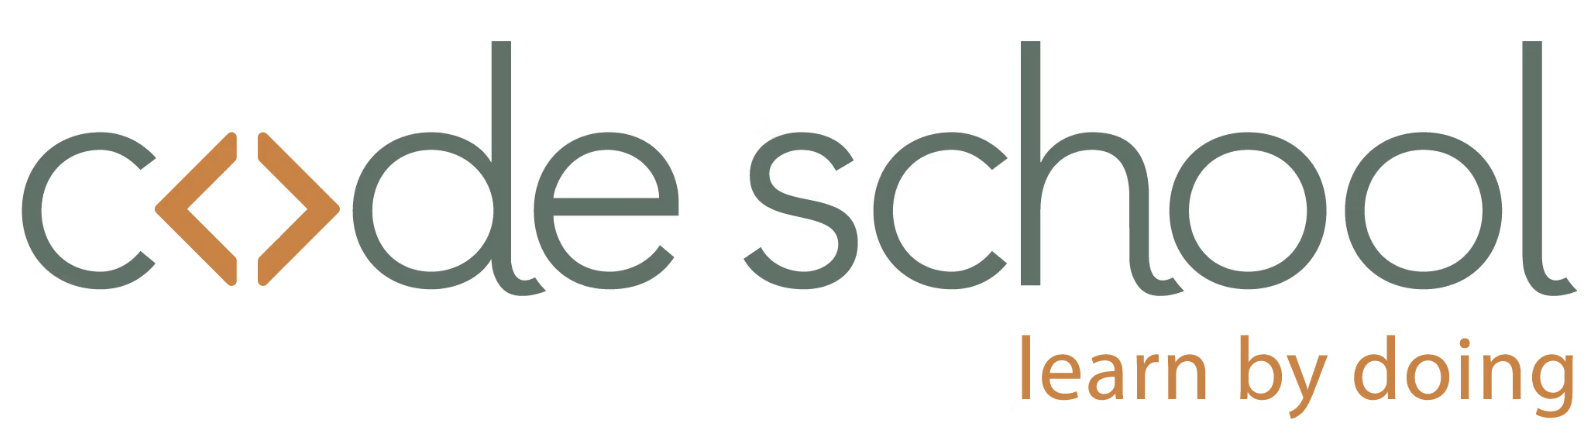 Code School - CrunchBase Company Profile & Funding